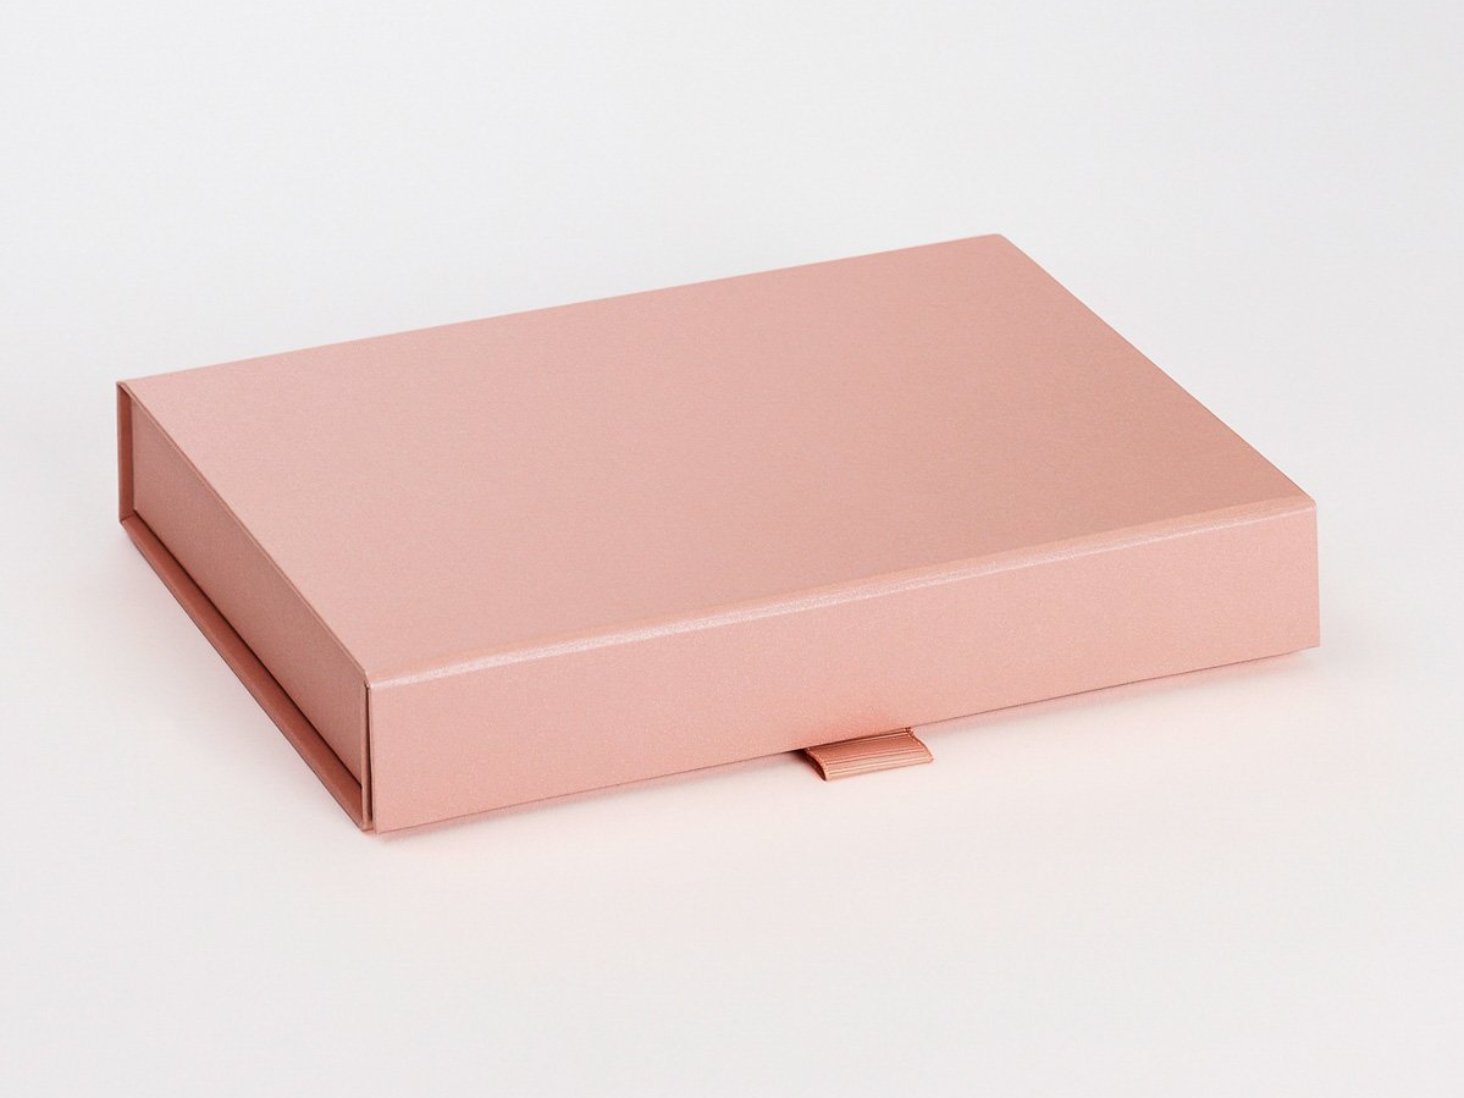 Rose Gold A5 Shallow Gift Box Sample Assembled